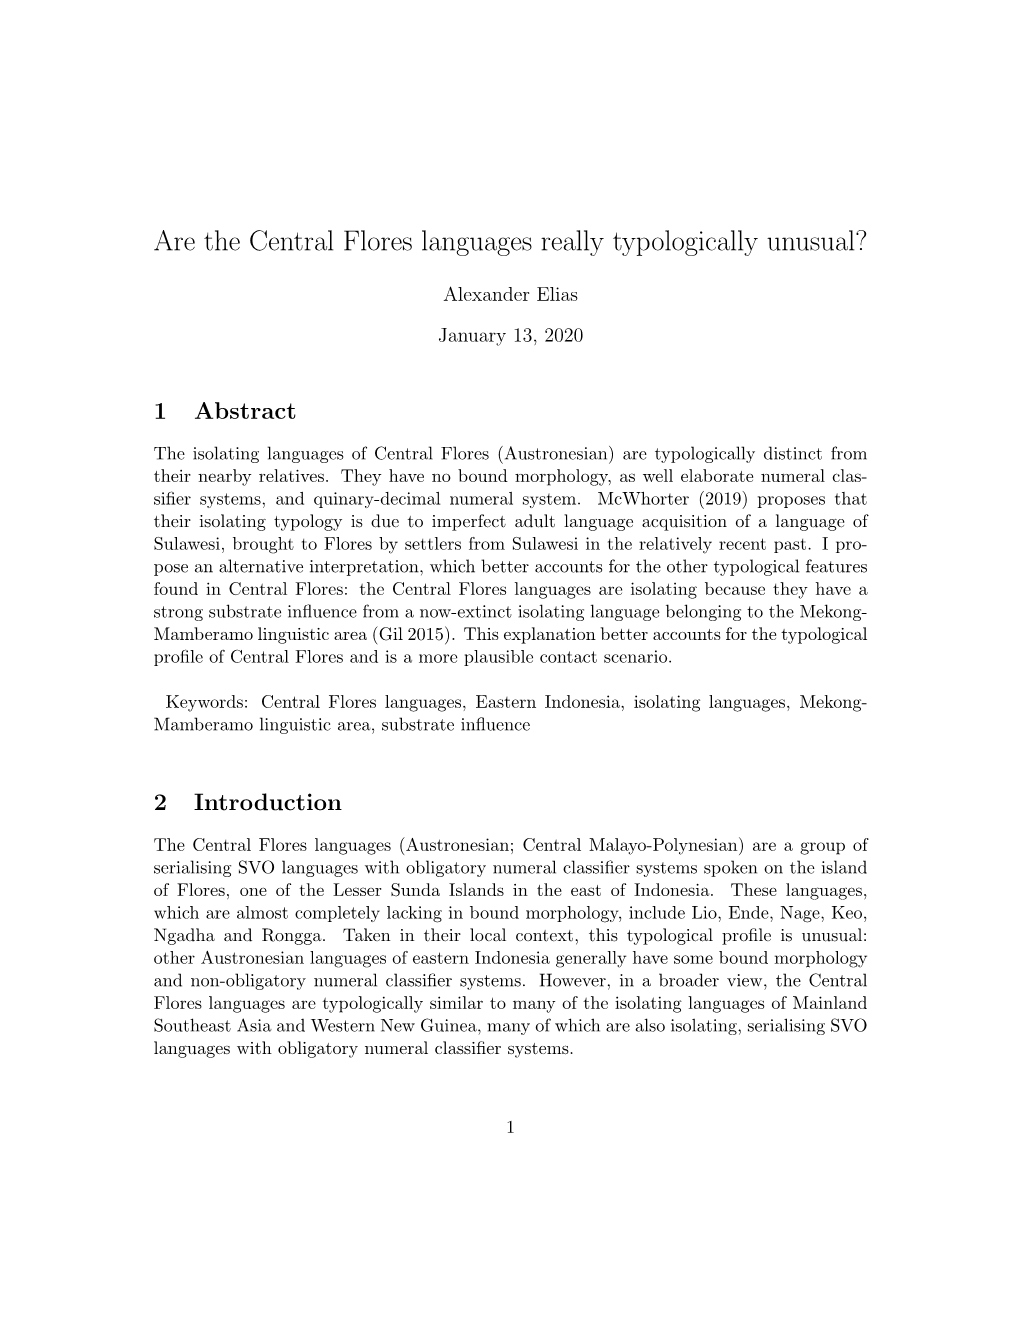 Languages of Flores